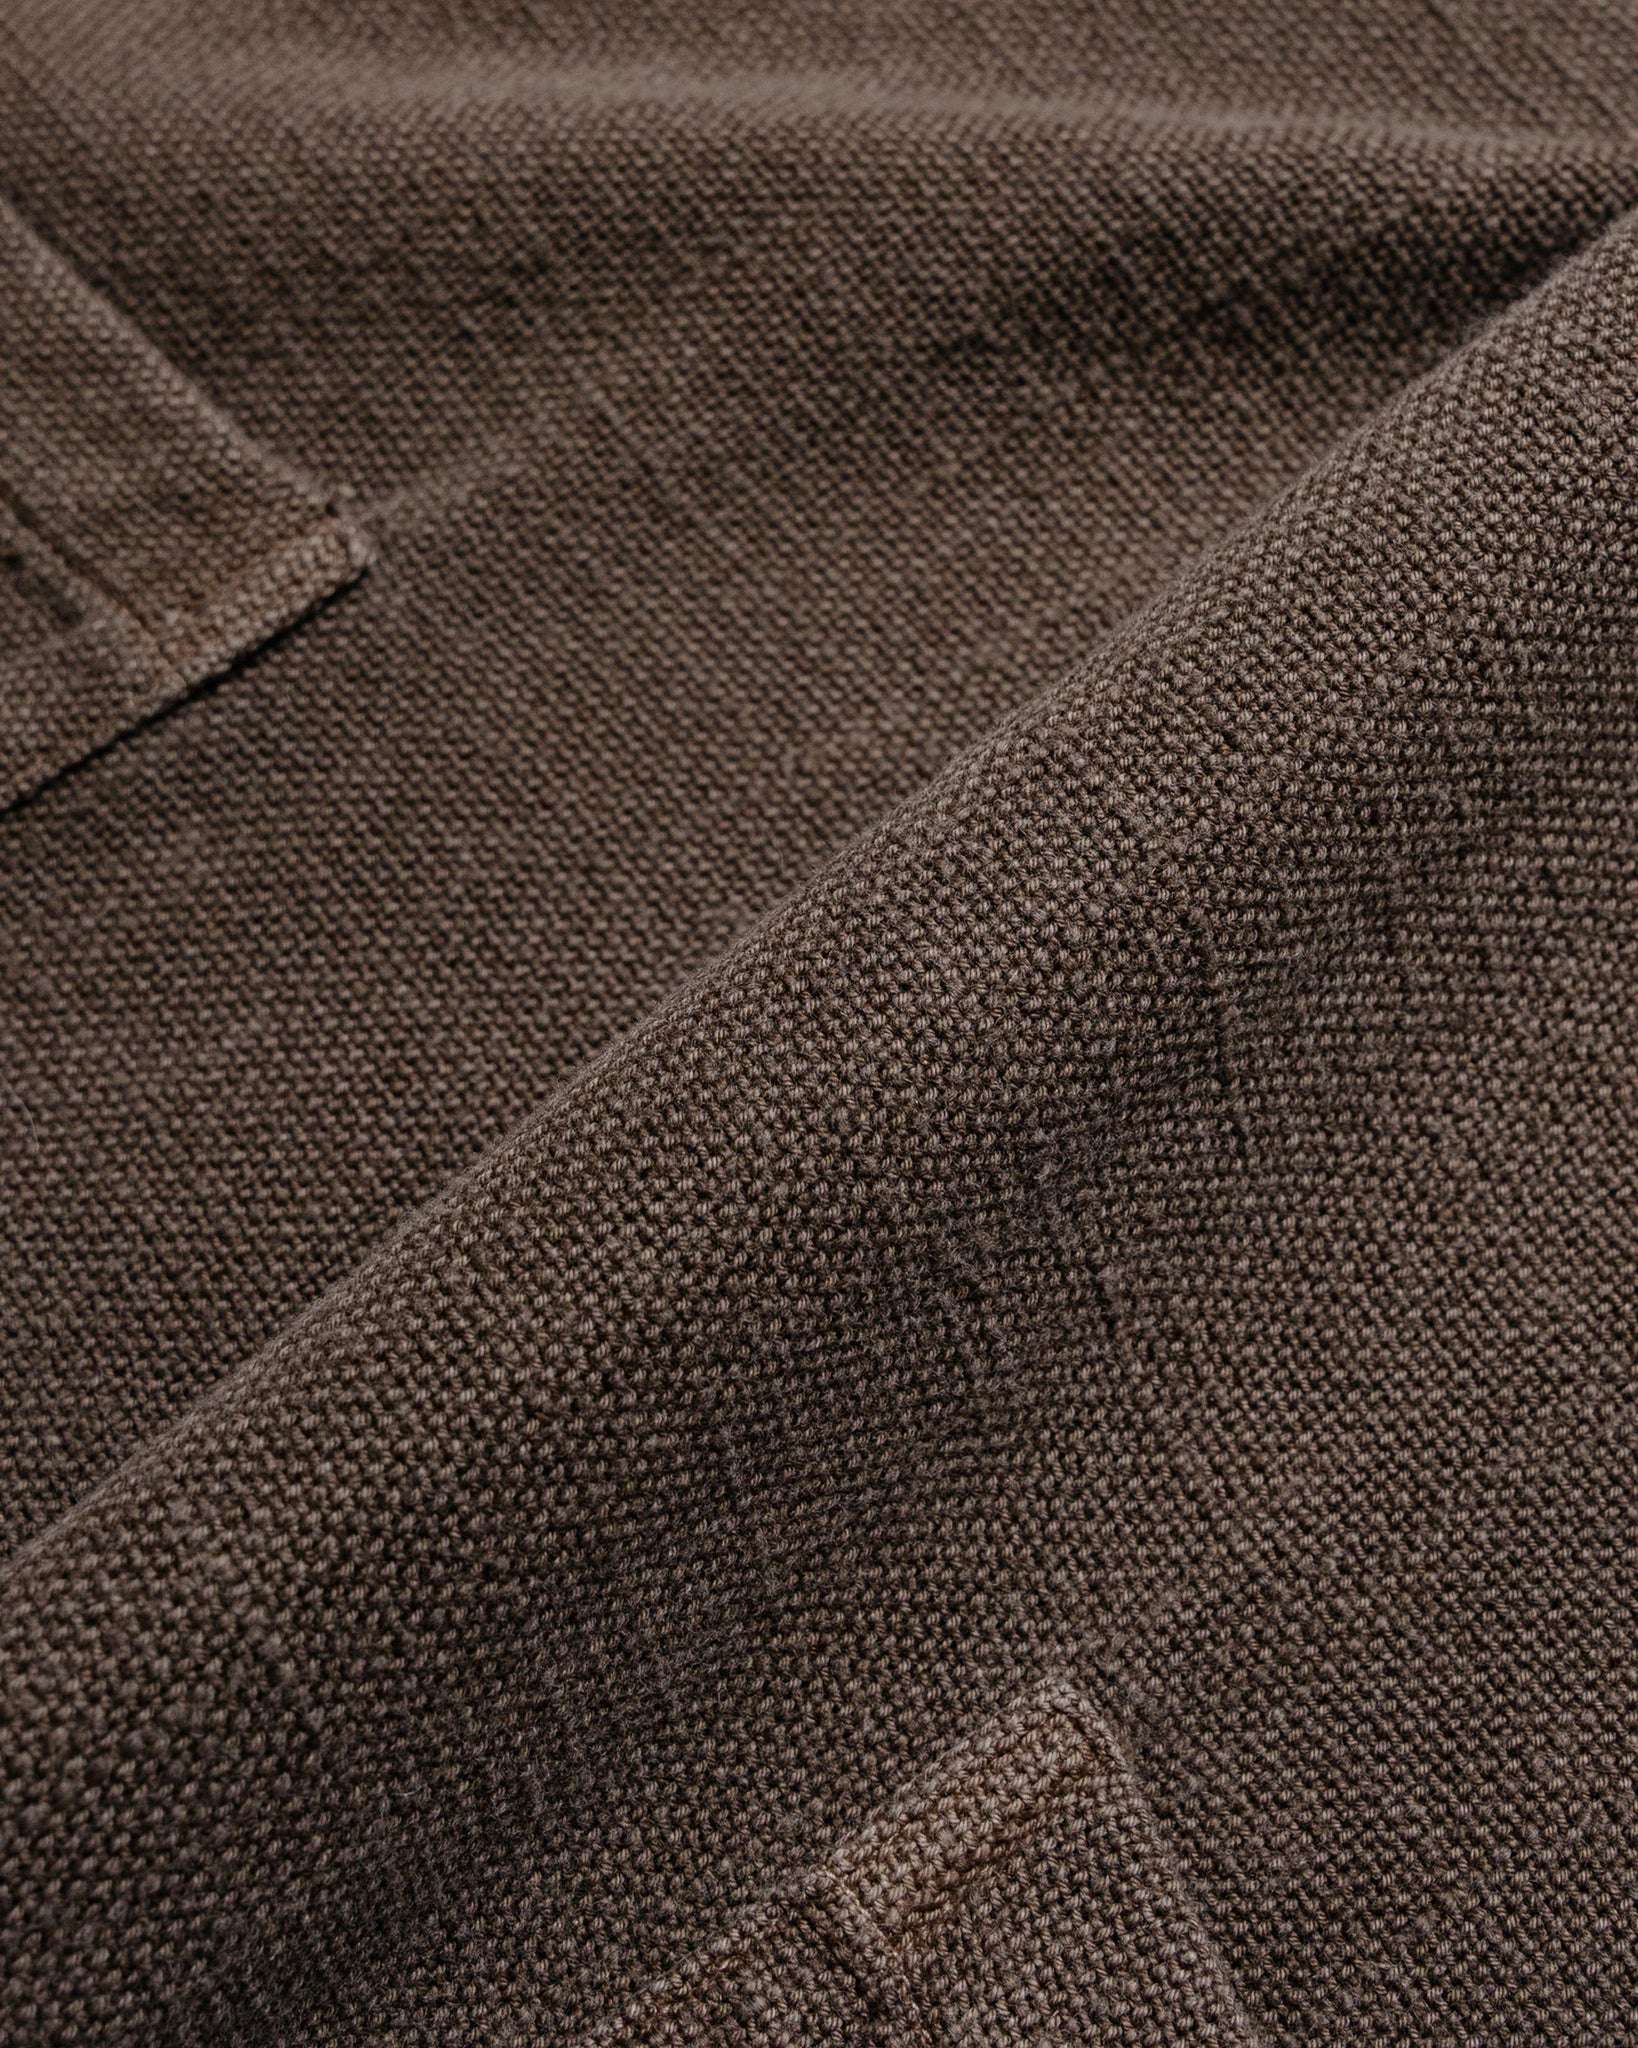 Our Legacy Elder Shirt Shortsleeve Brown Sparse Panama fabric